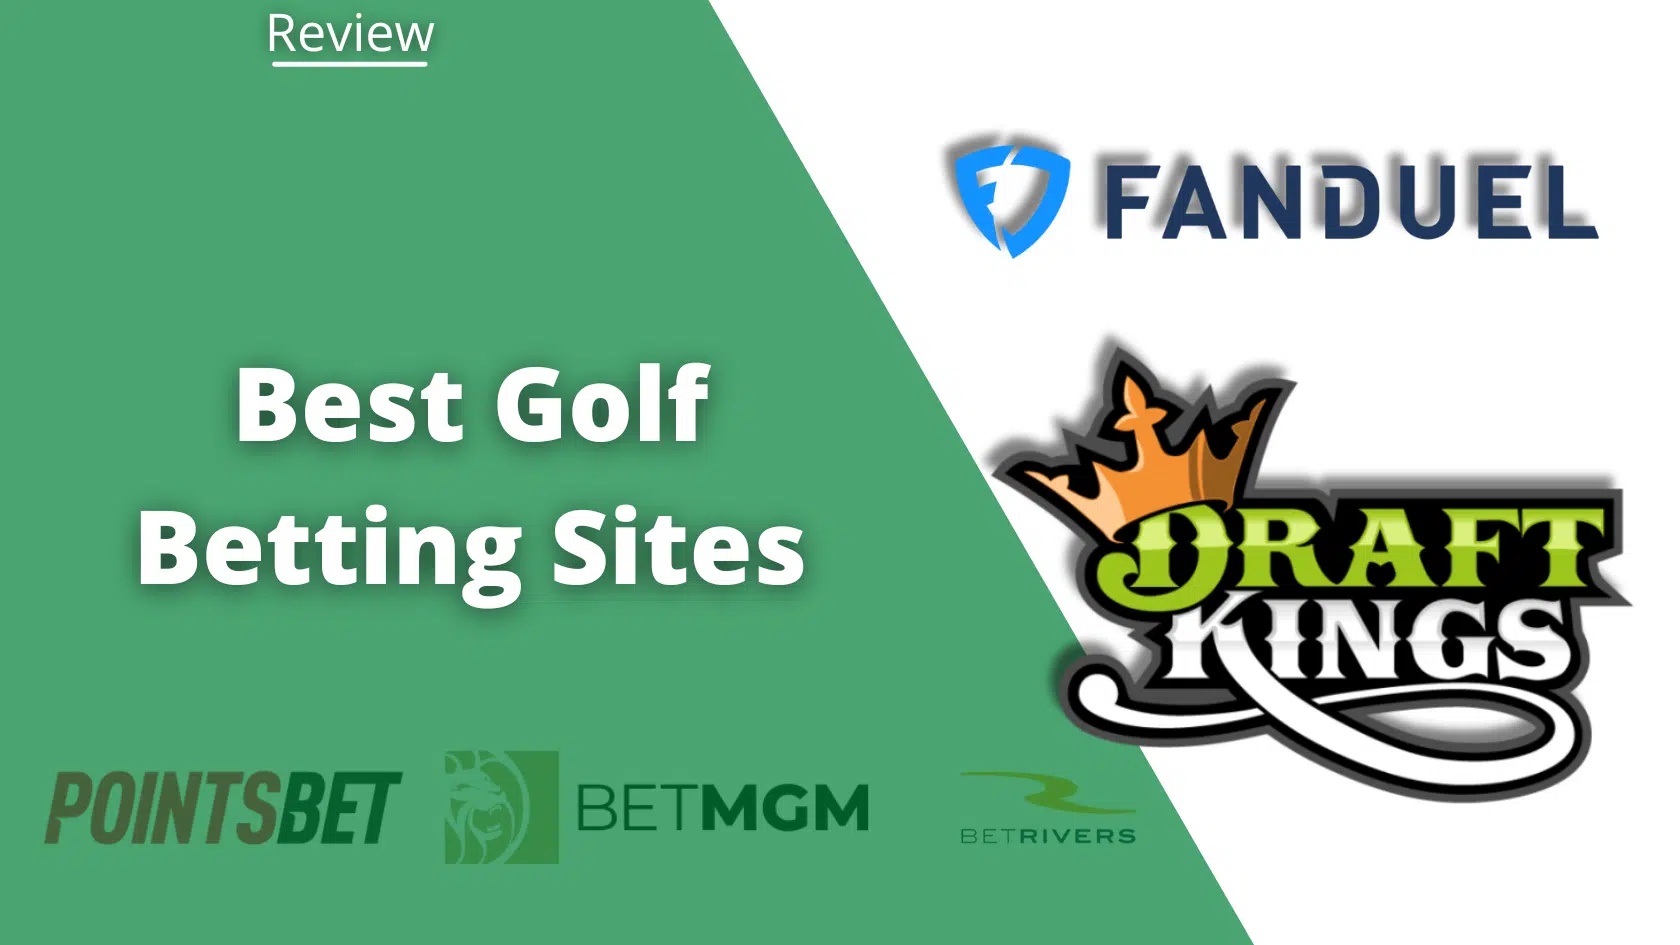 best golf betting sites